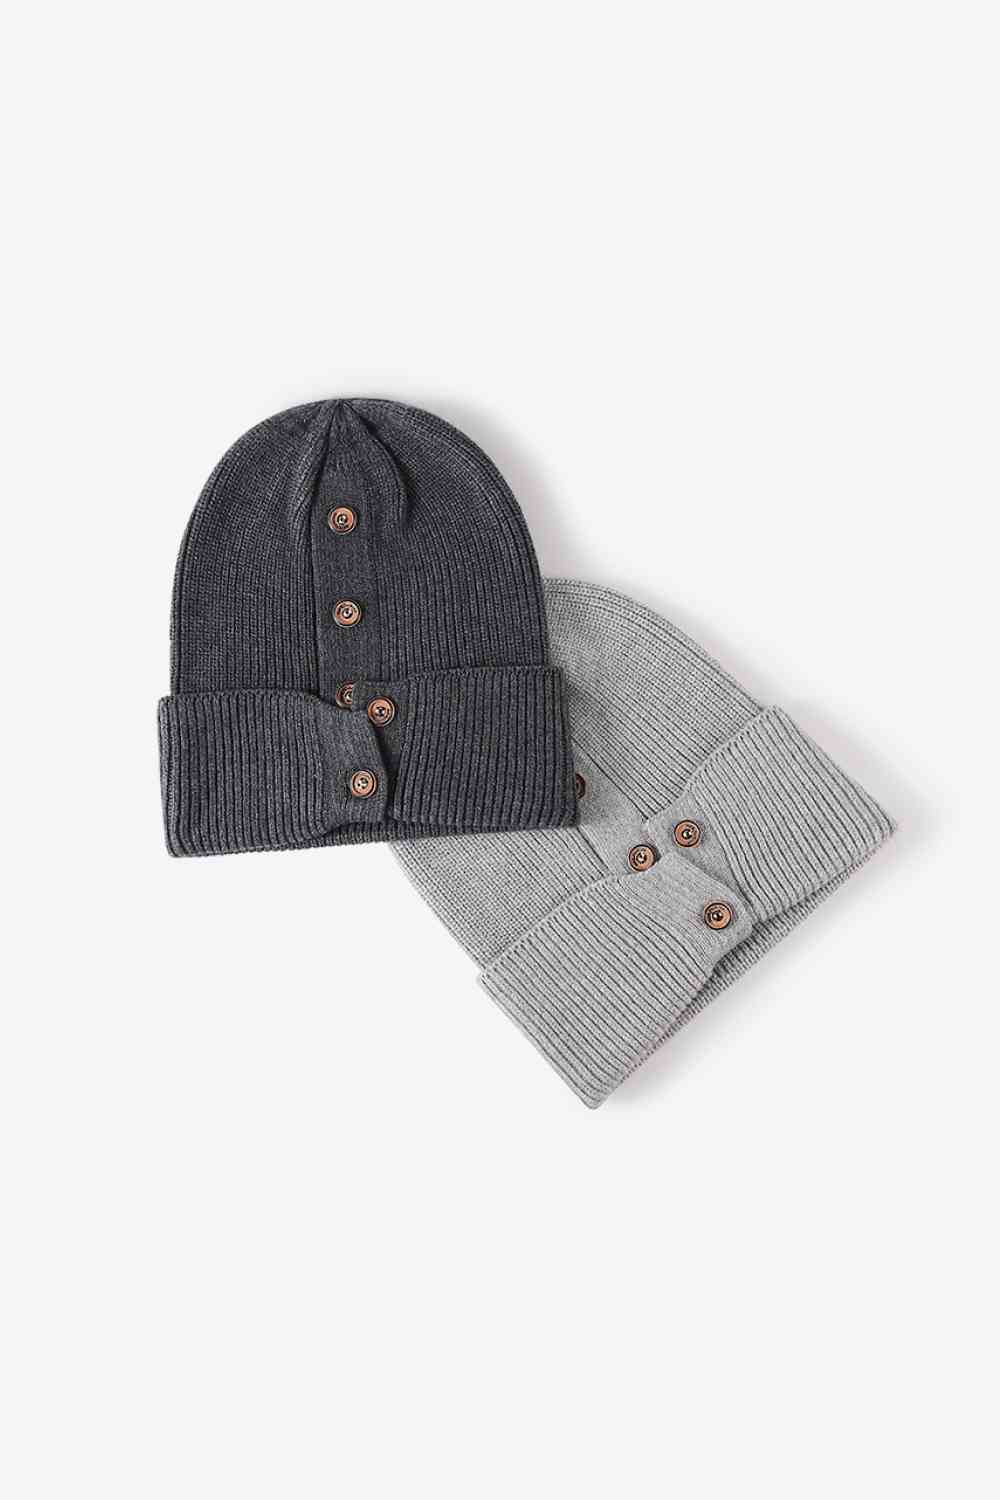 CHIC HATZ Button Detail Rib-Knit Hat Cuff Beanie